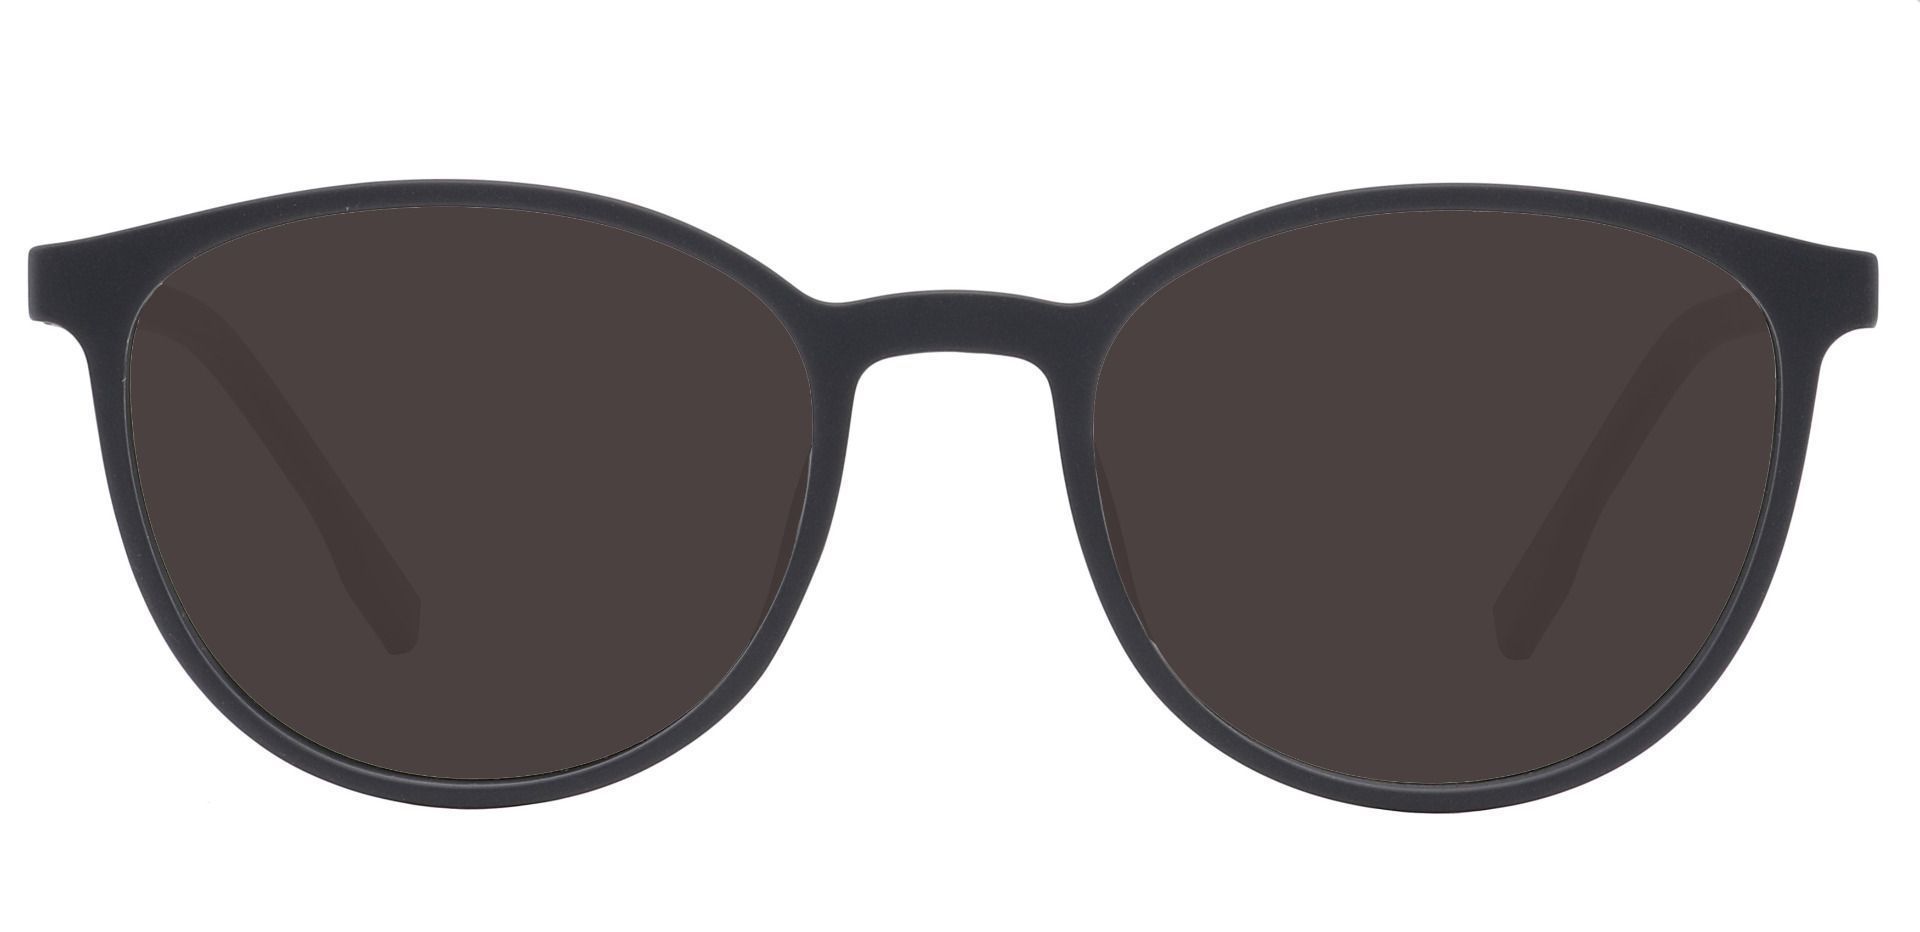 Bay Round Progressive Sunglasses - Black Frame With Gray Lenses